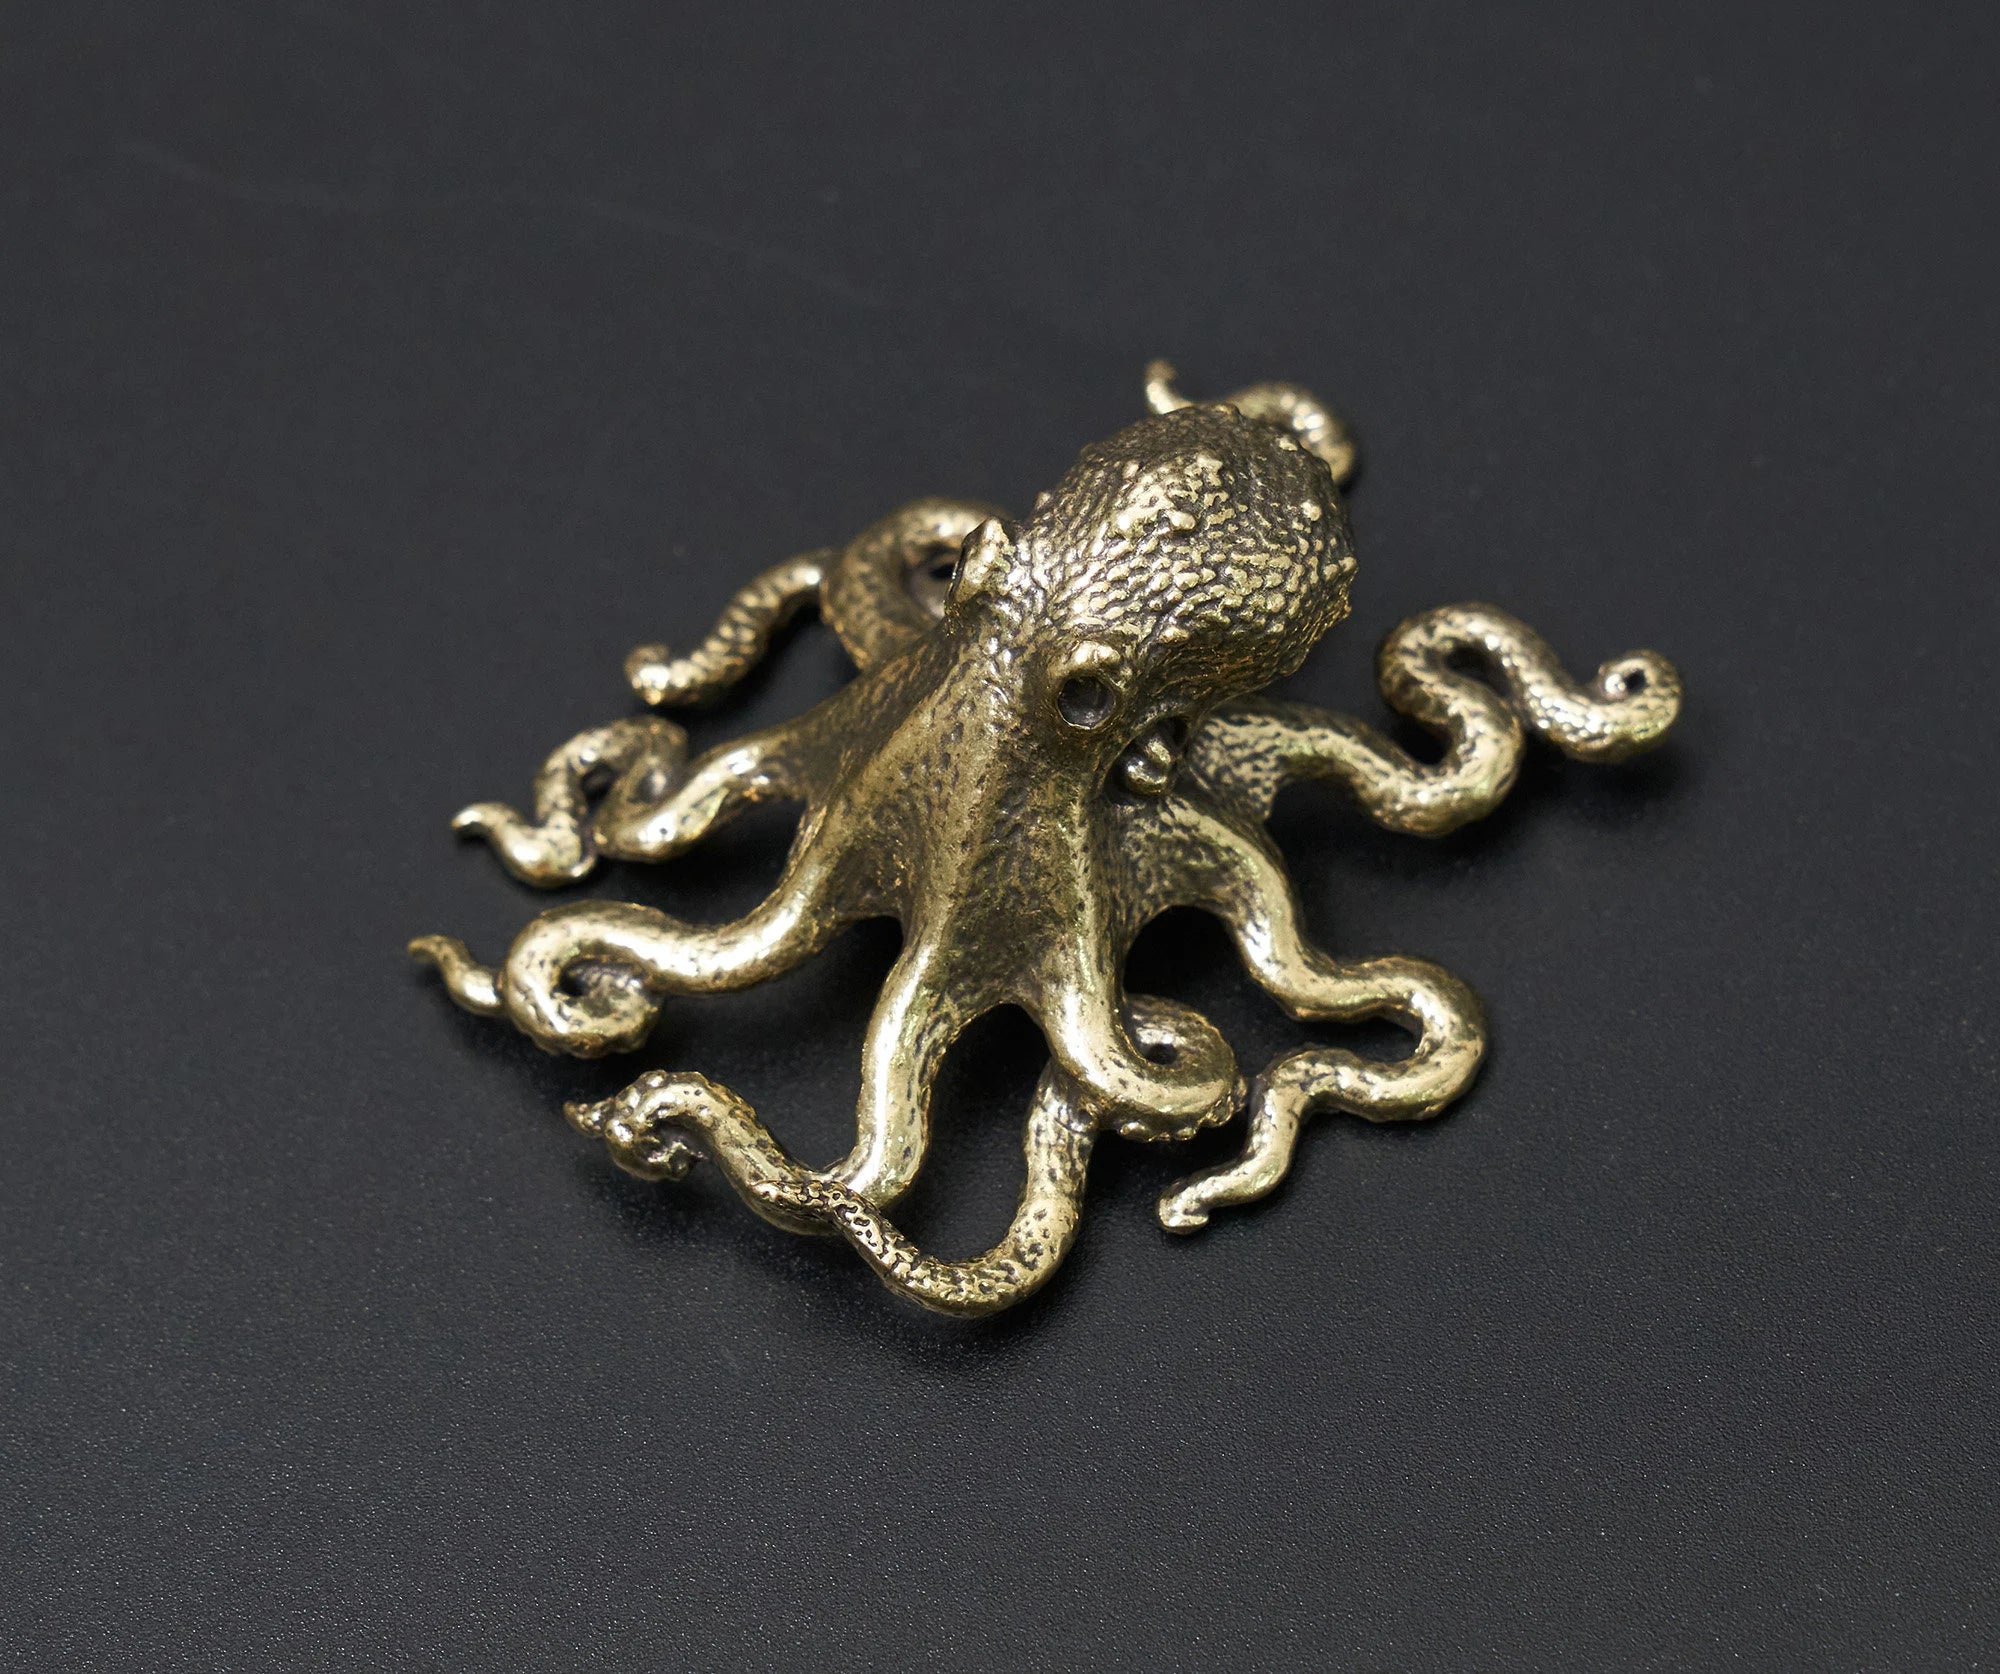 Mini Brass Octopus Statue Figurine Tiny Animal Gold Miniature Handmade Metal Art Desk Accessories Sculpture Paper Weight Gift for Her